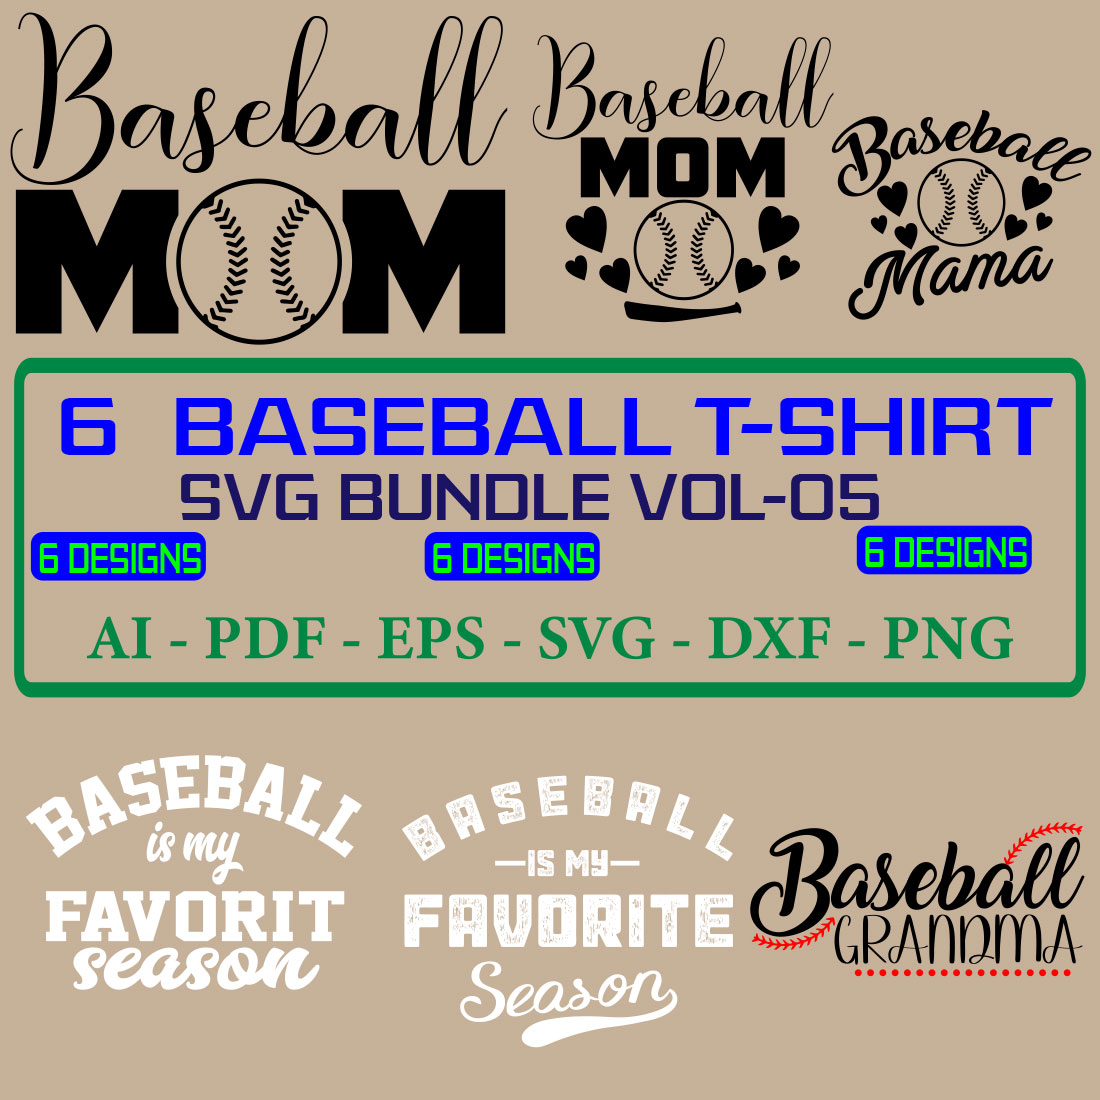 6 Baseball T-shirt SVG Bundle Vol 05 cover image.